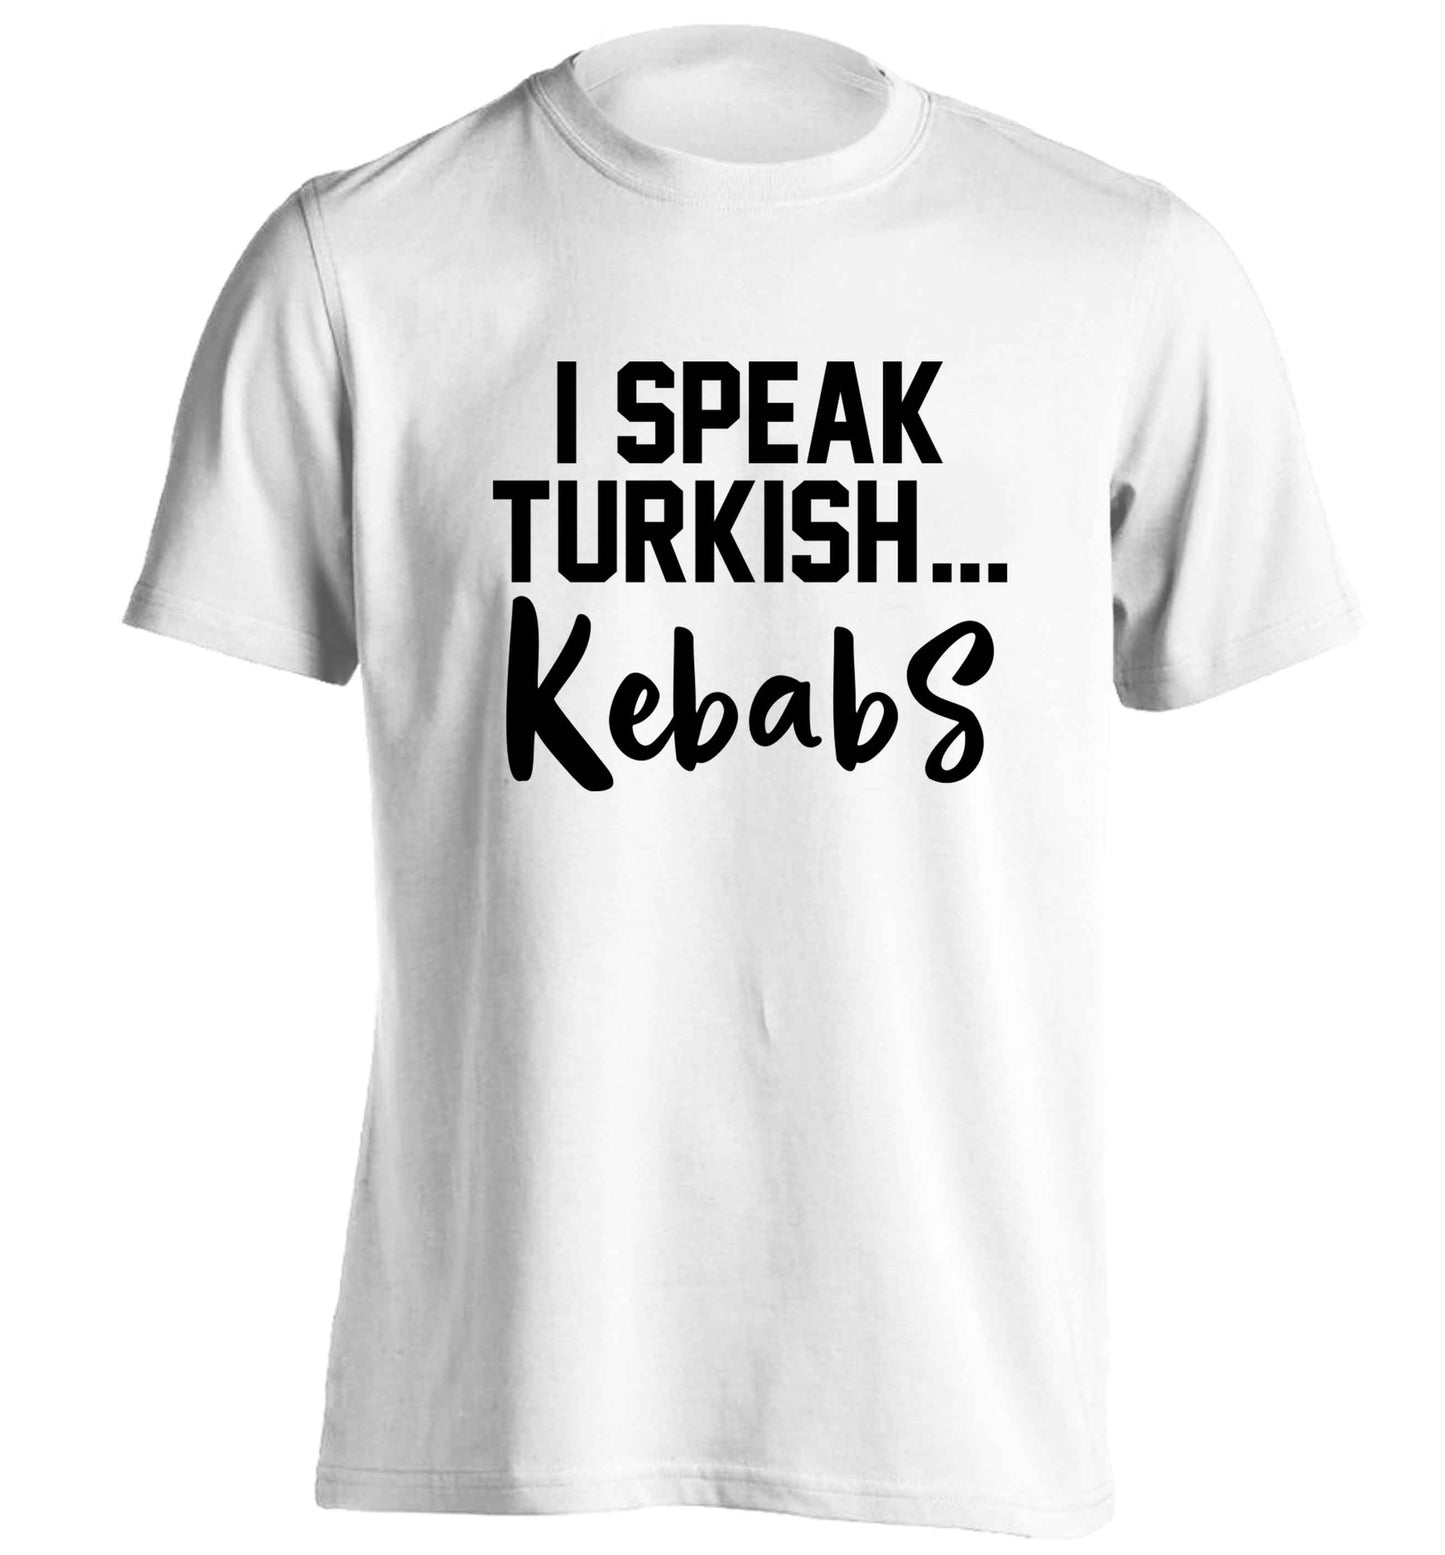 I speak Turkish...kebabs adults unisex white Tshirt 2XL